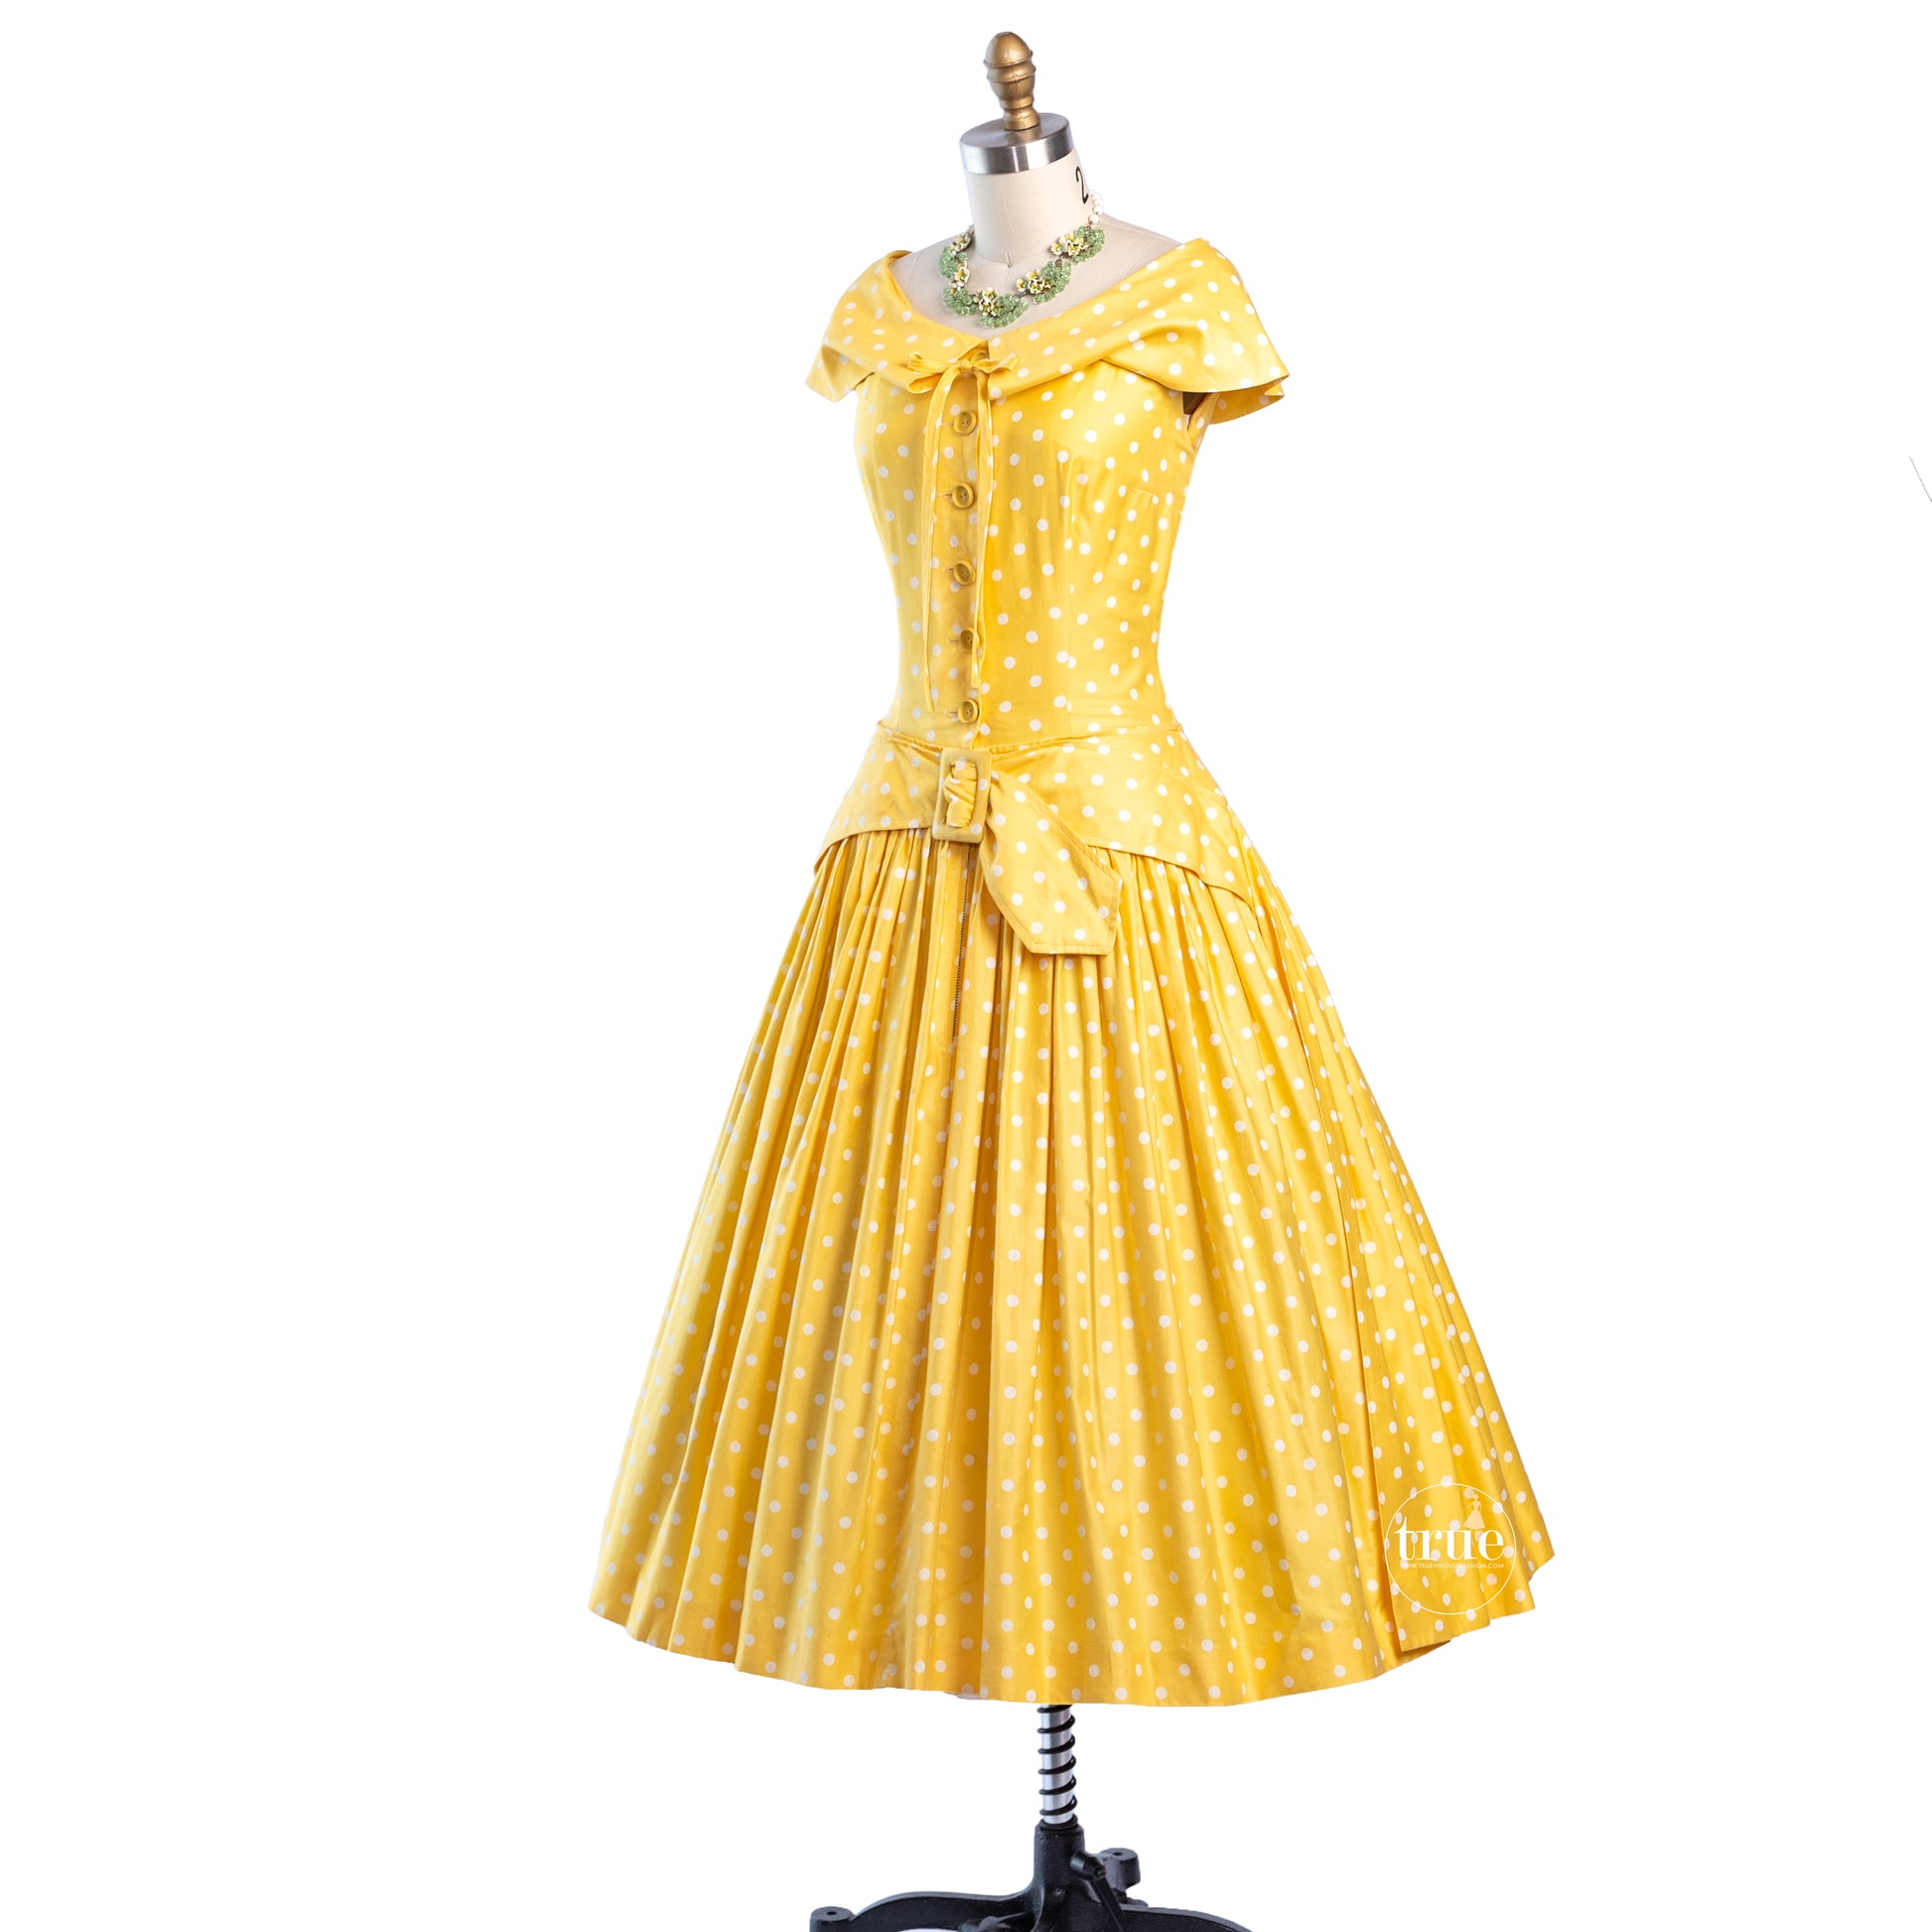 Vintage 1950's Dress ...Dior inspired Suzy Perette Yellow Polka Dot Cotton Full Skirt Dress